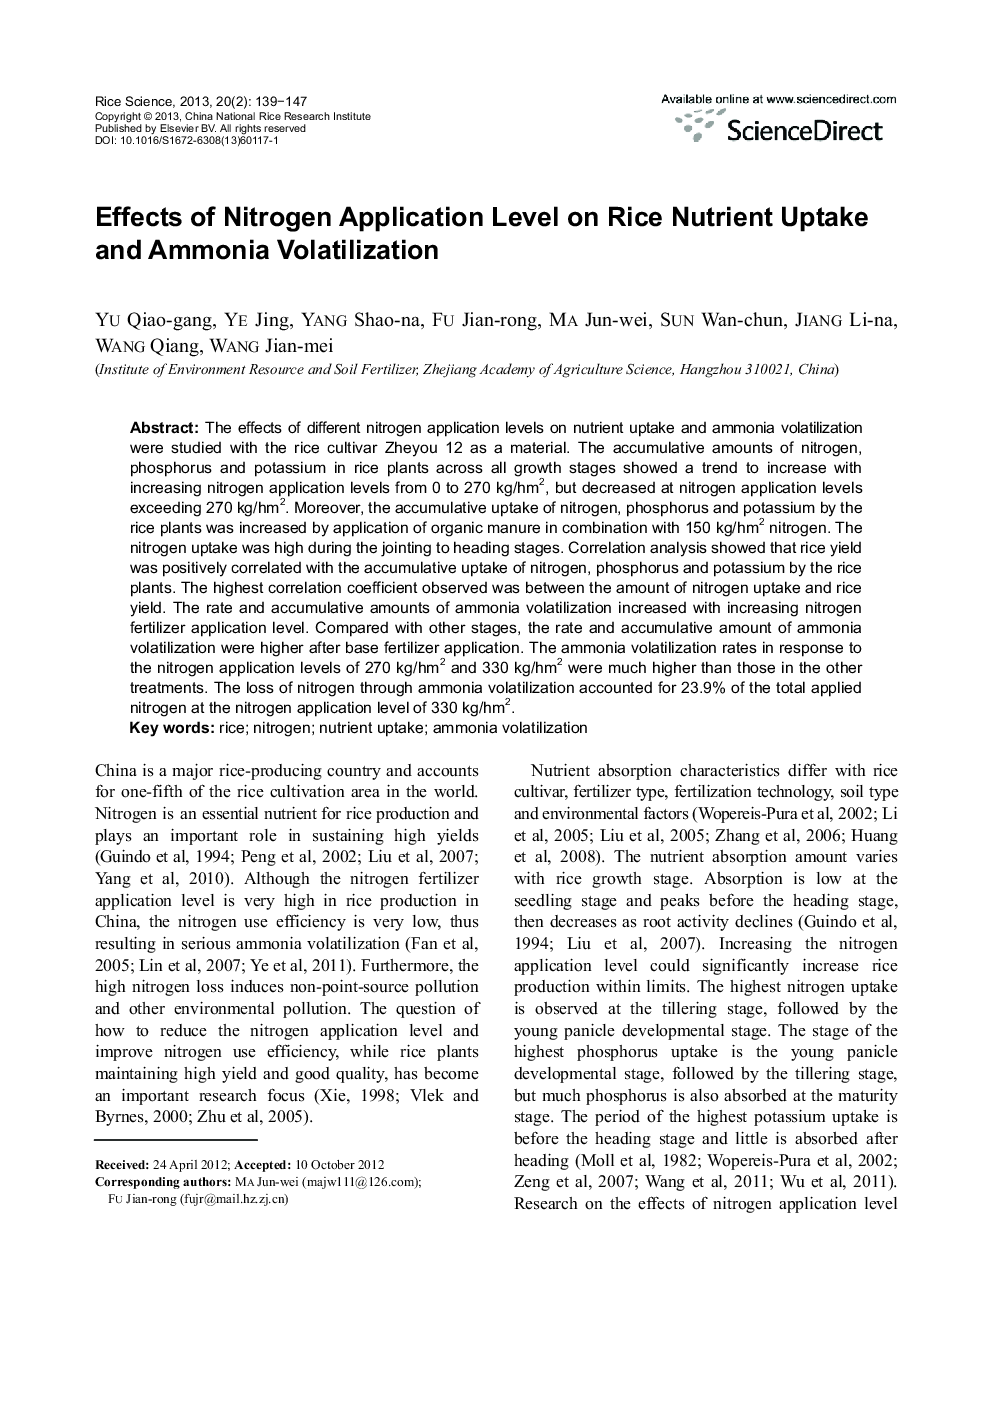 Effects of Nitrogen Application Level on Rice Nutrient Uptake and Ammonia Volatilization